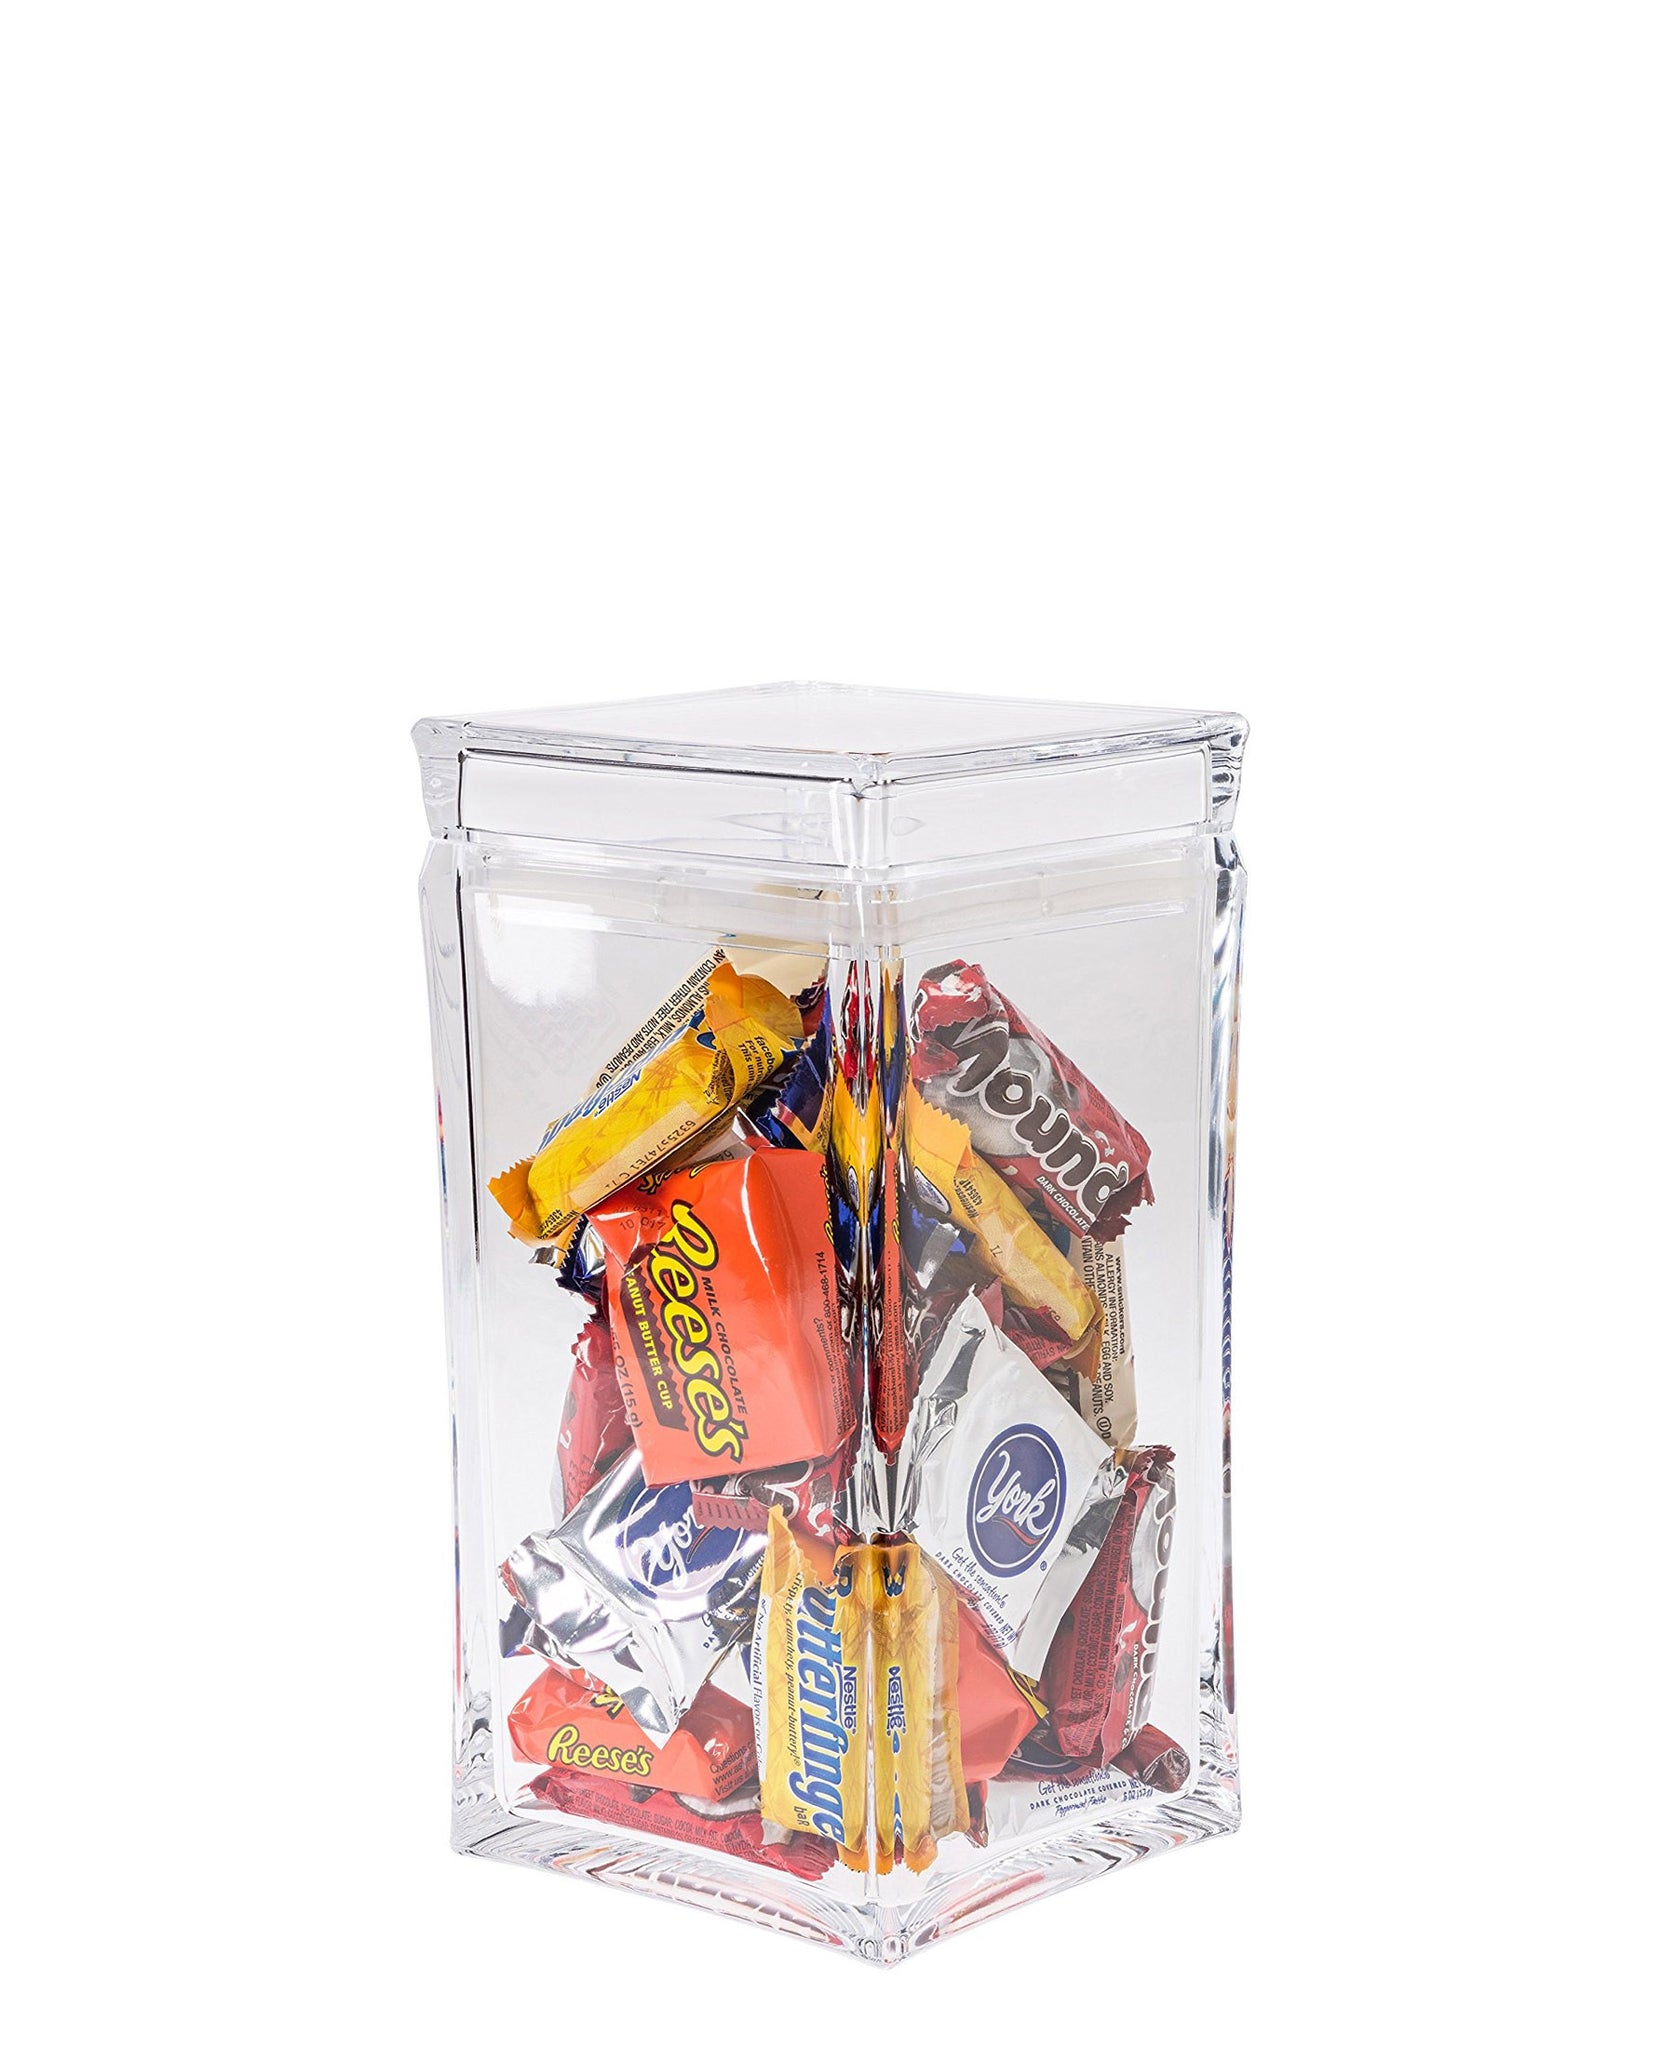 Medium Acrylic Candy Jar | Jar With Lid | Acrylic Container